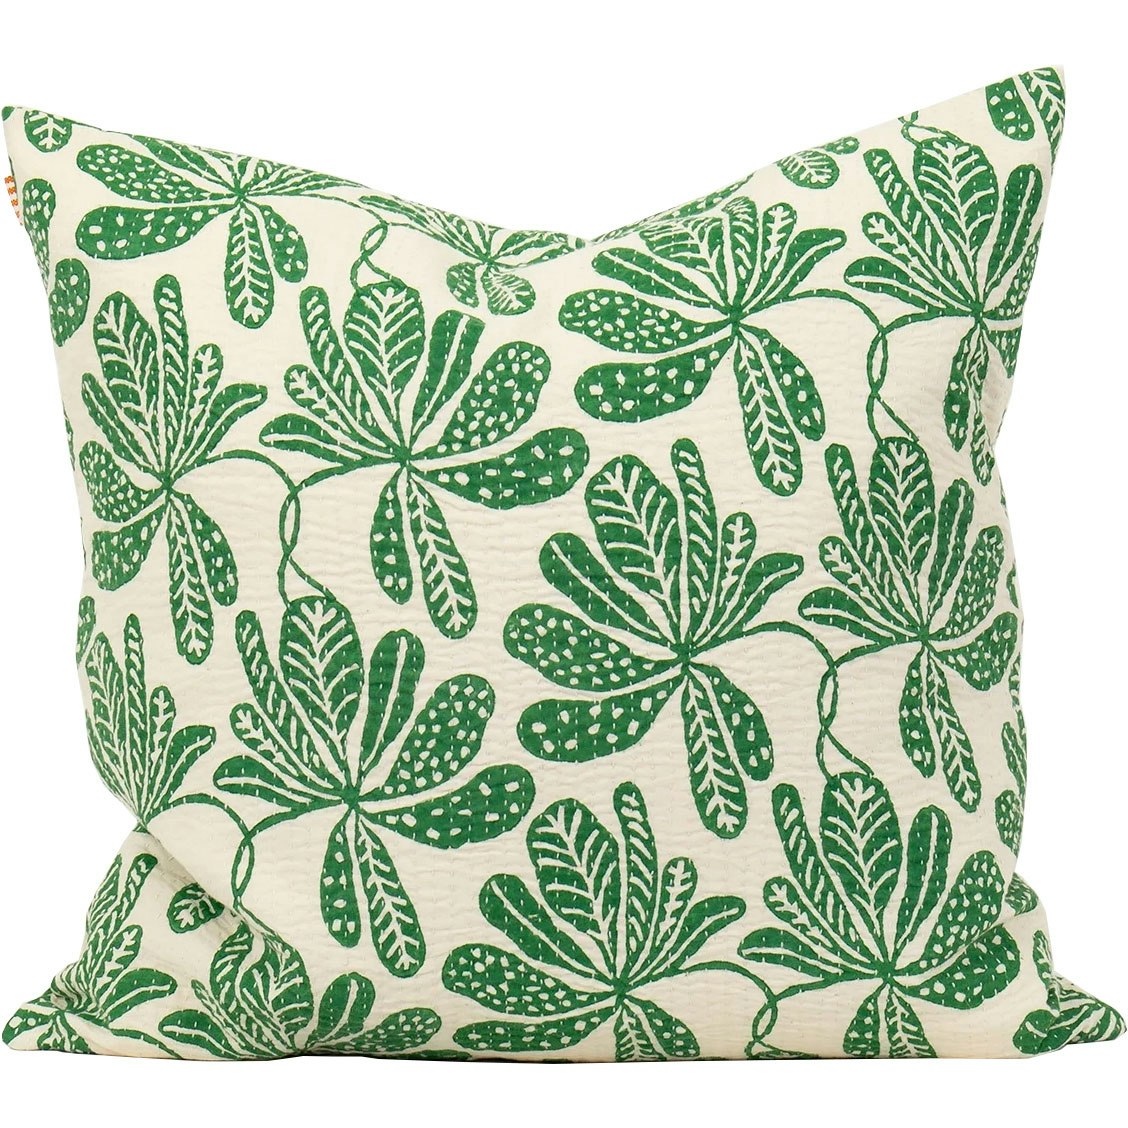 Chestnut Cushion Cover 50x50 cm, Green